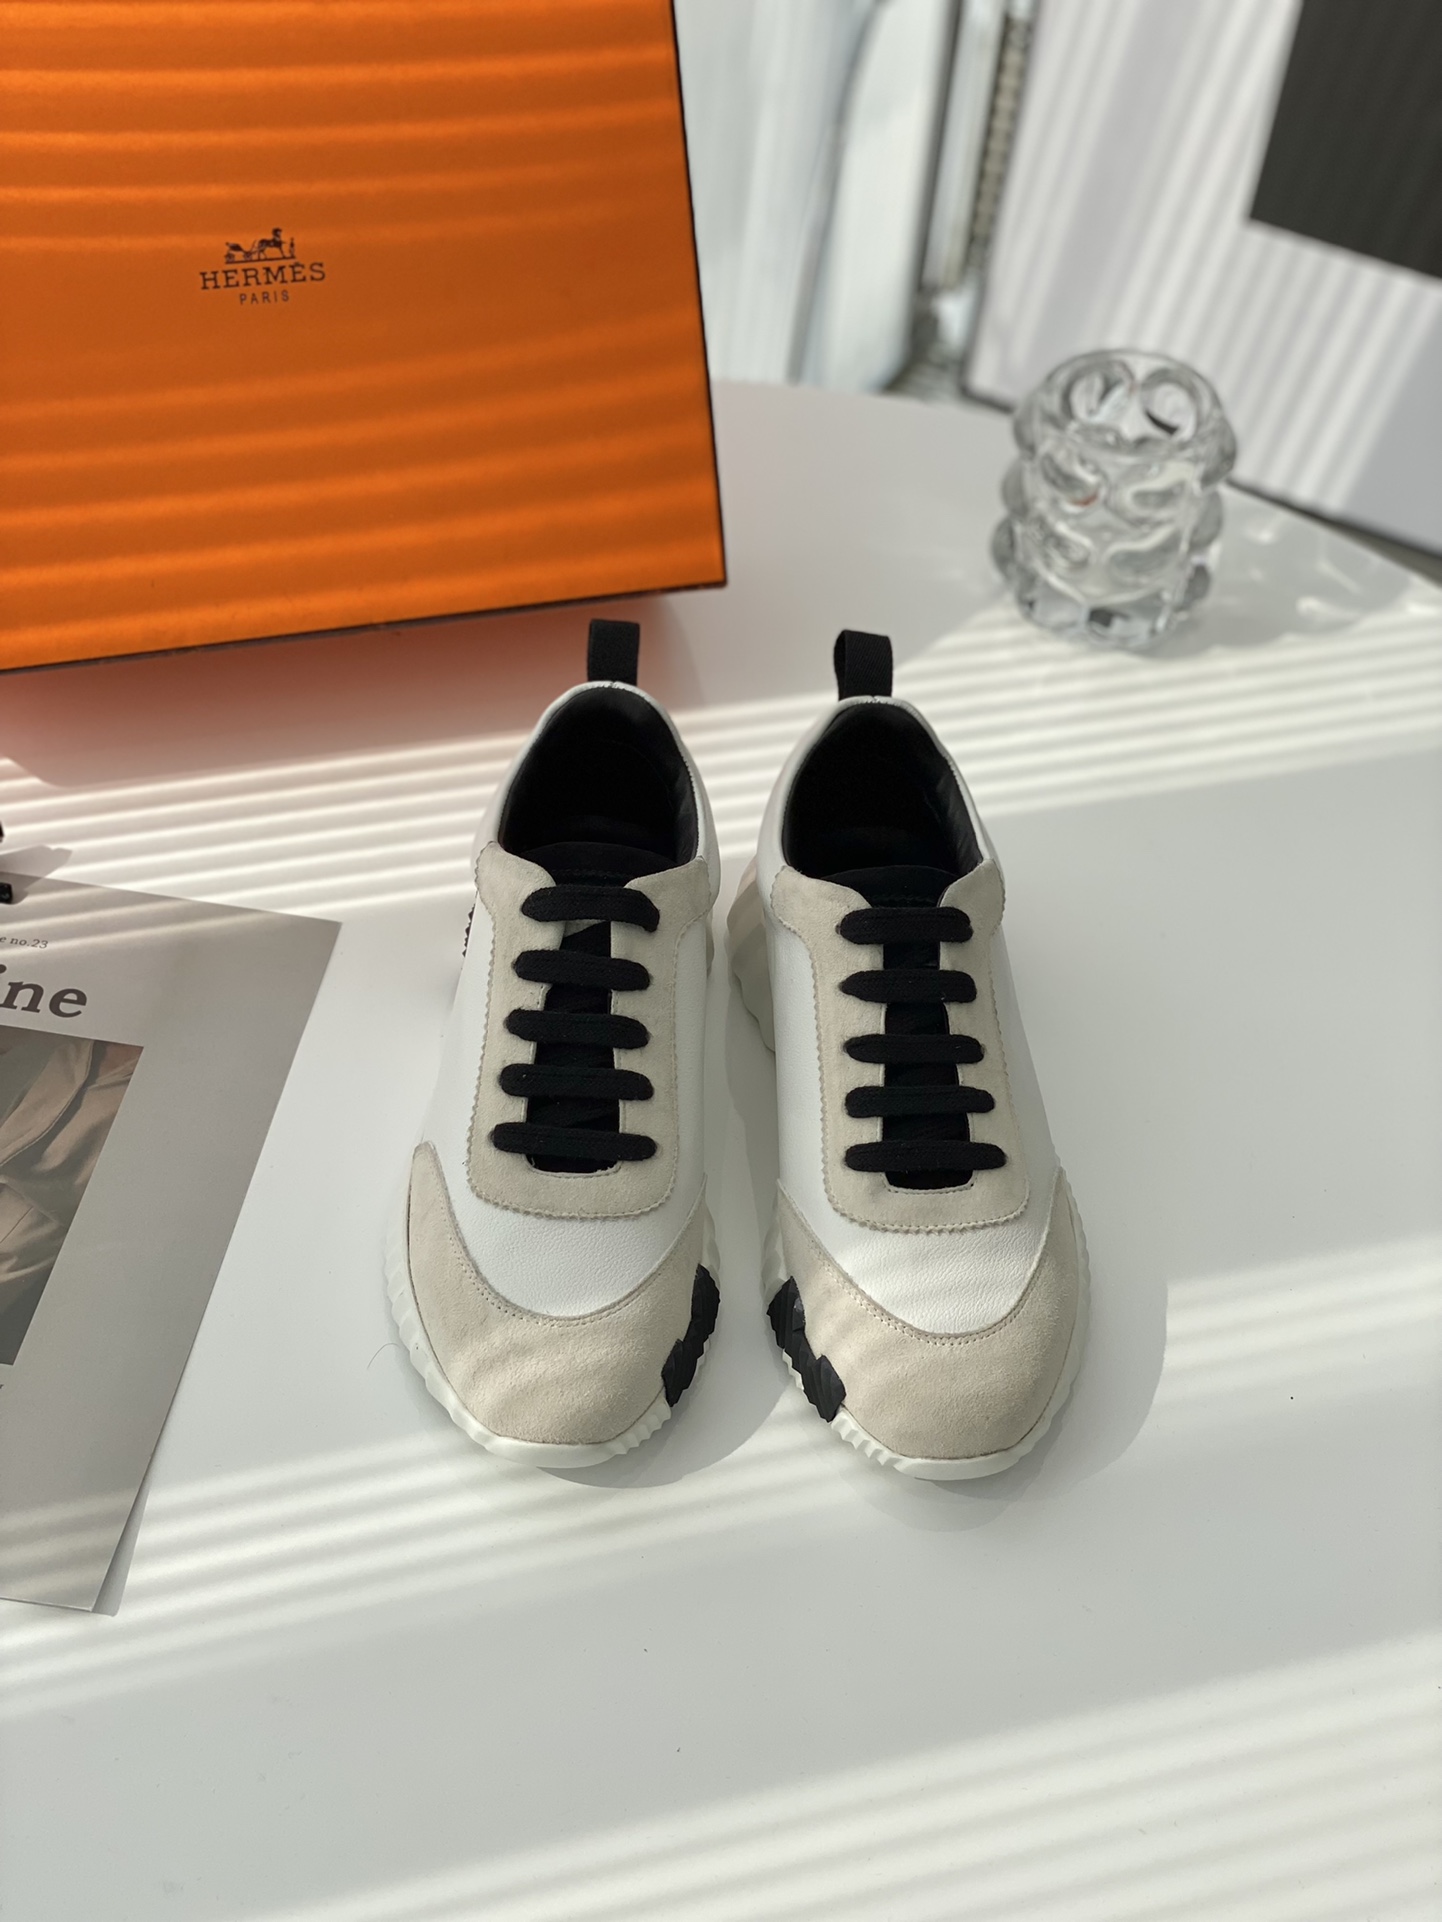 Hermes Shoes Sneakers Black White Sweatpants